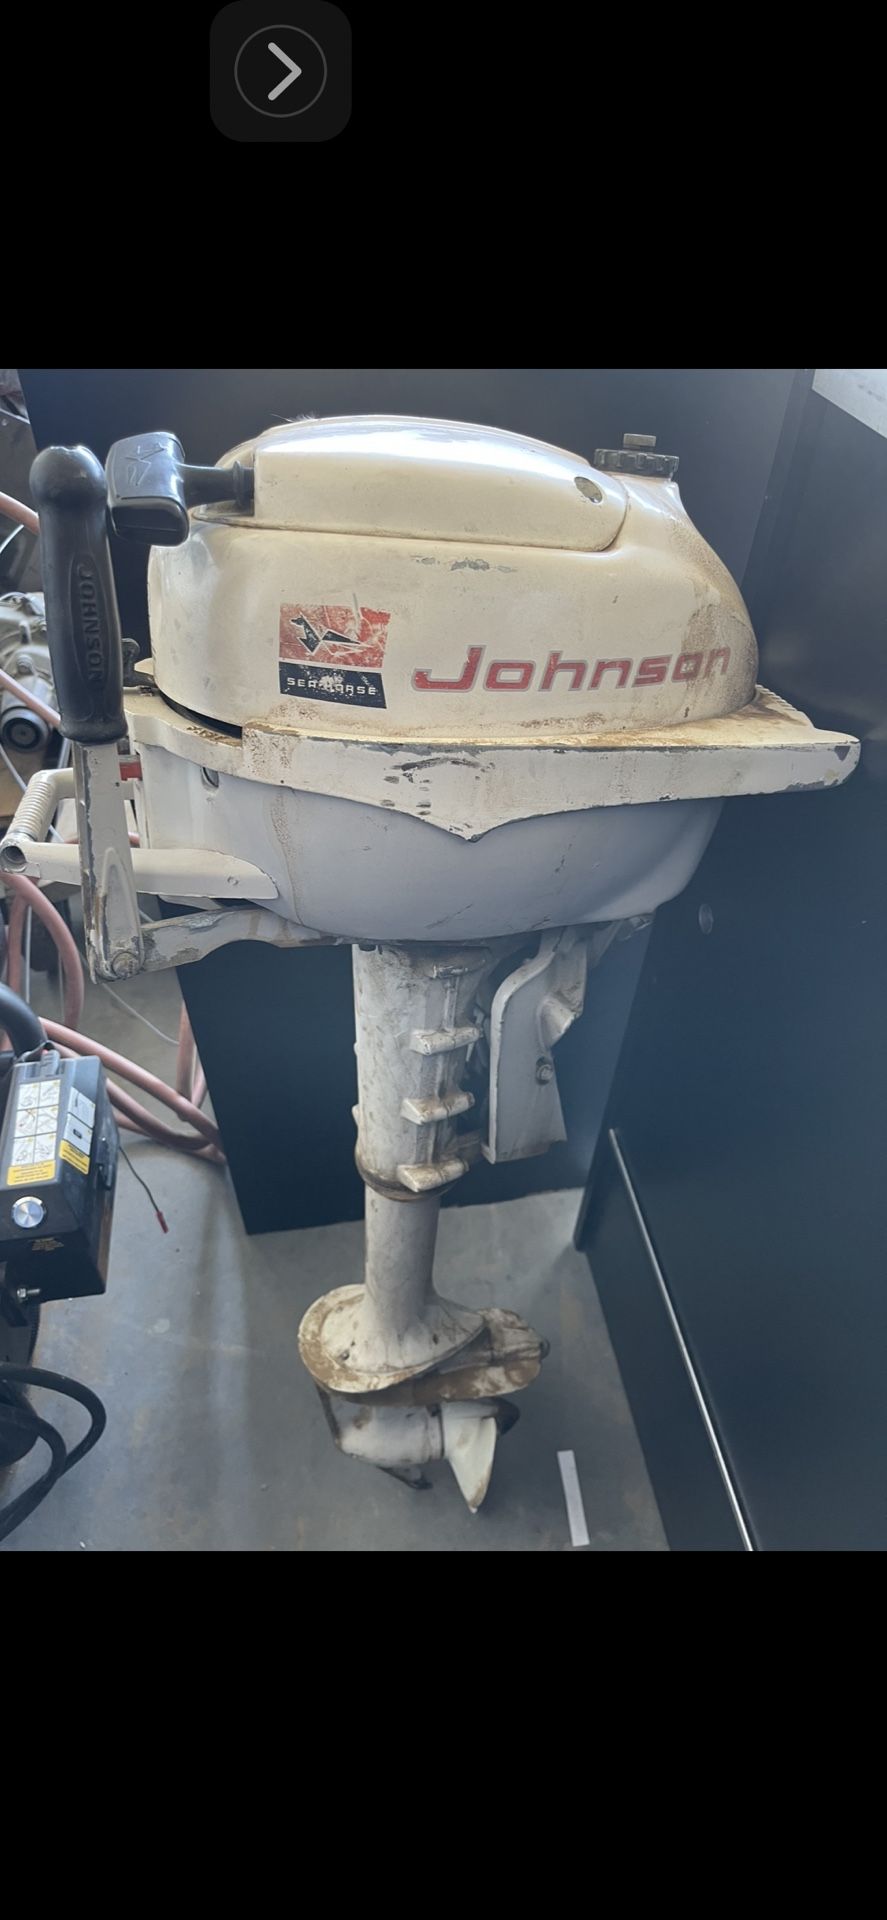 Johnson Outboard Motor $200